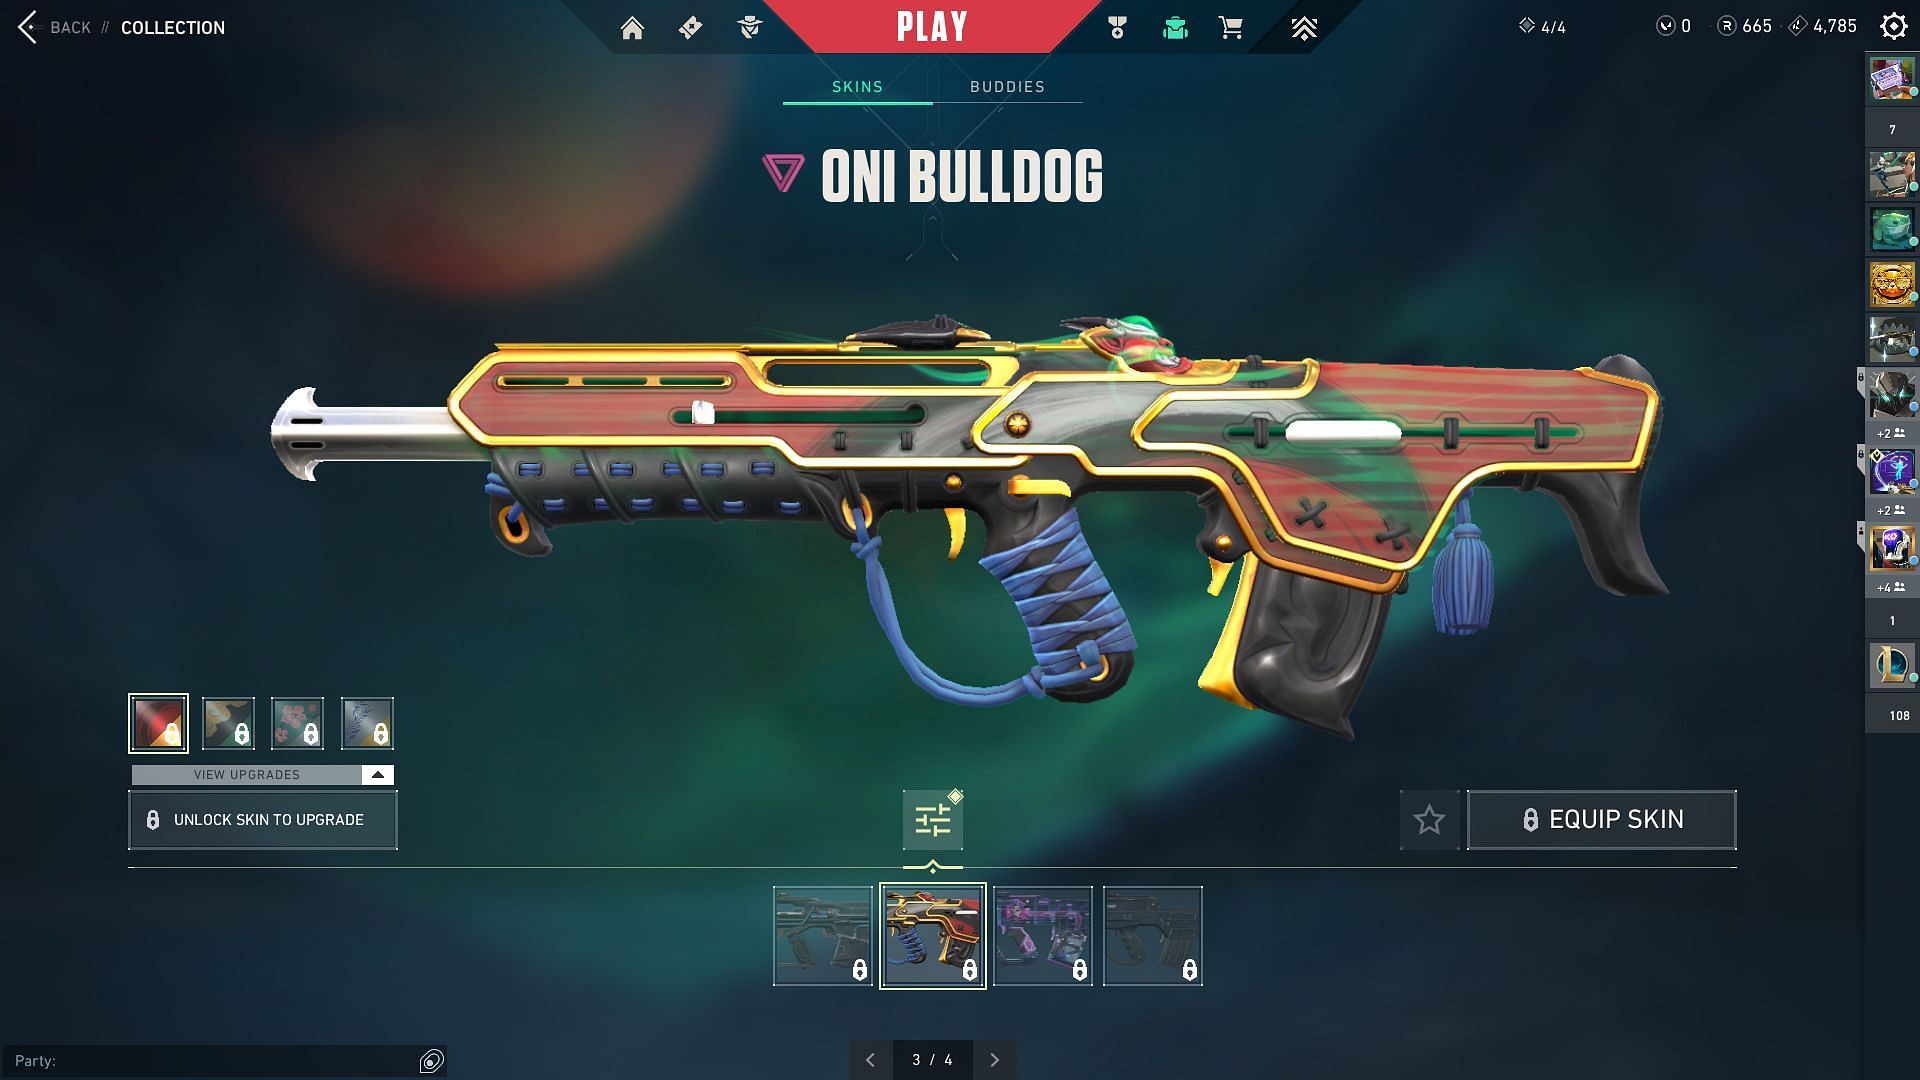 The Oni Bulldog (Image via Riot Games)